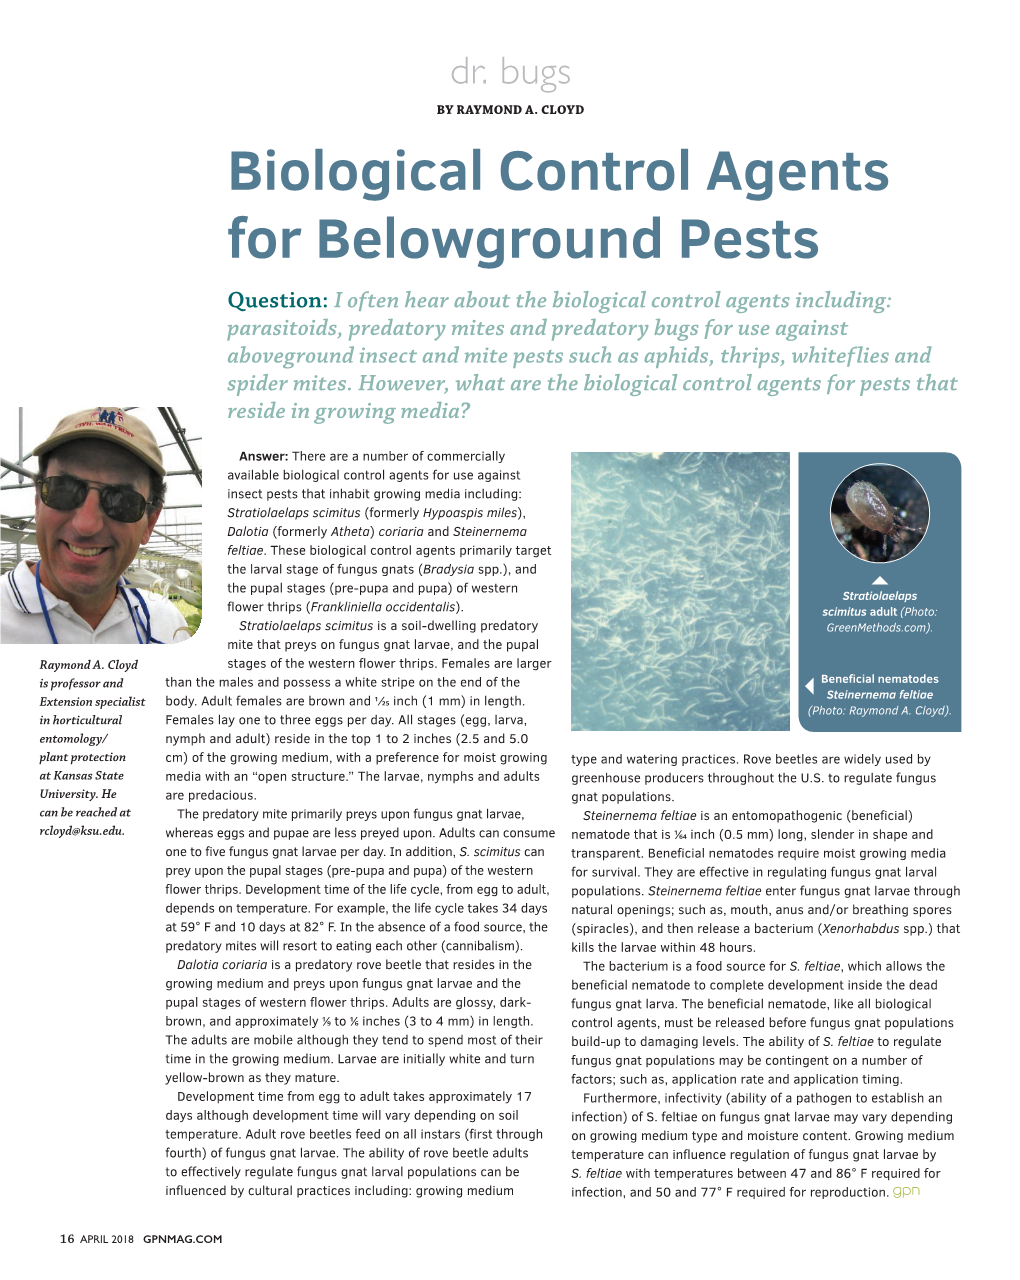 PDF: Biological Control Agents for Belowground Pests